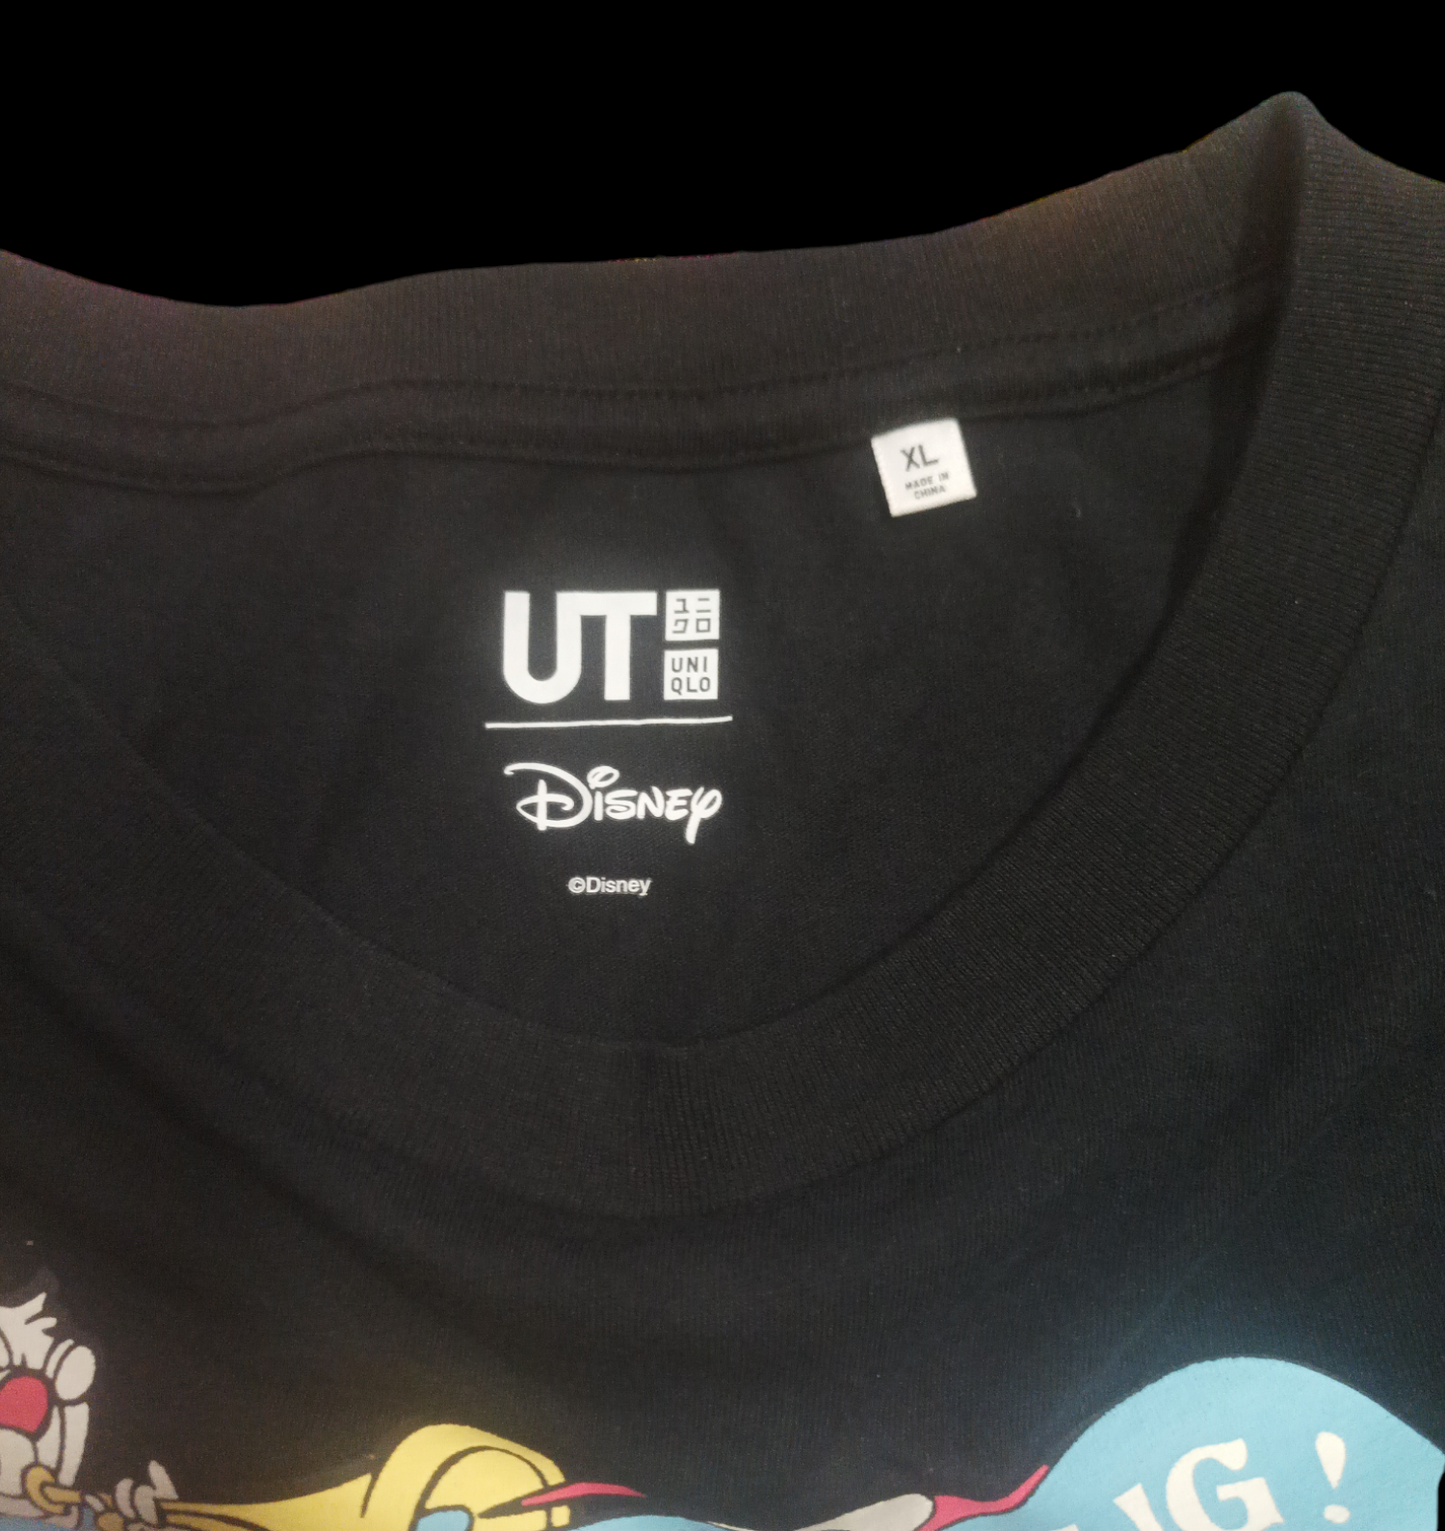 T-Shirt Disney X Uniqlo Alice in Wonderland